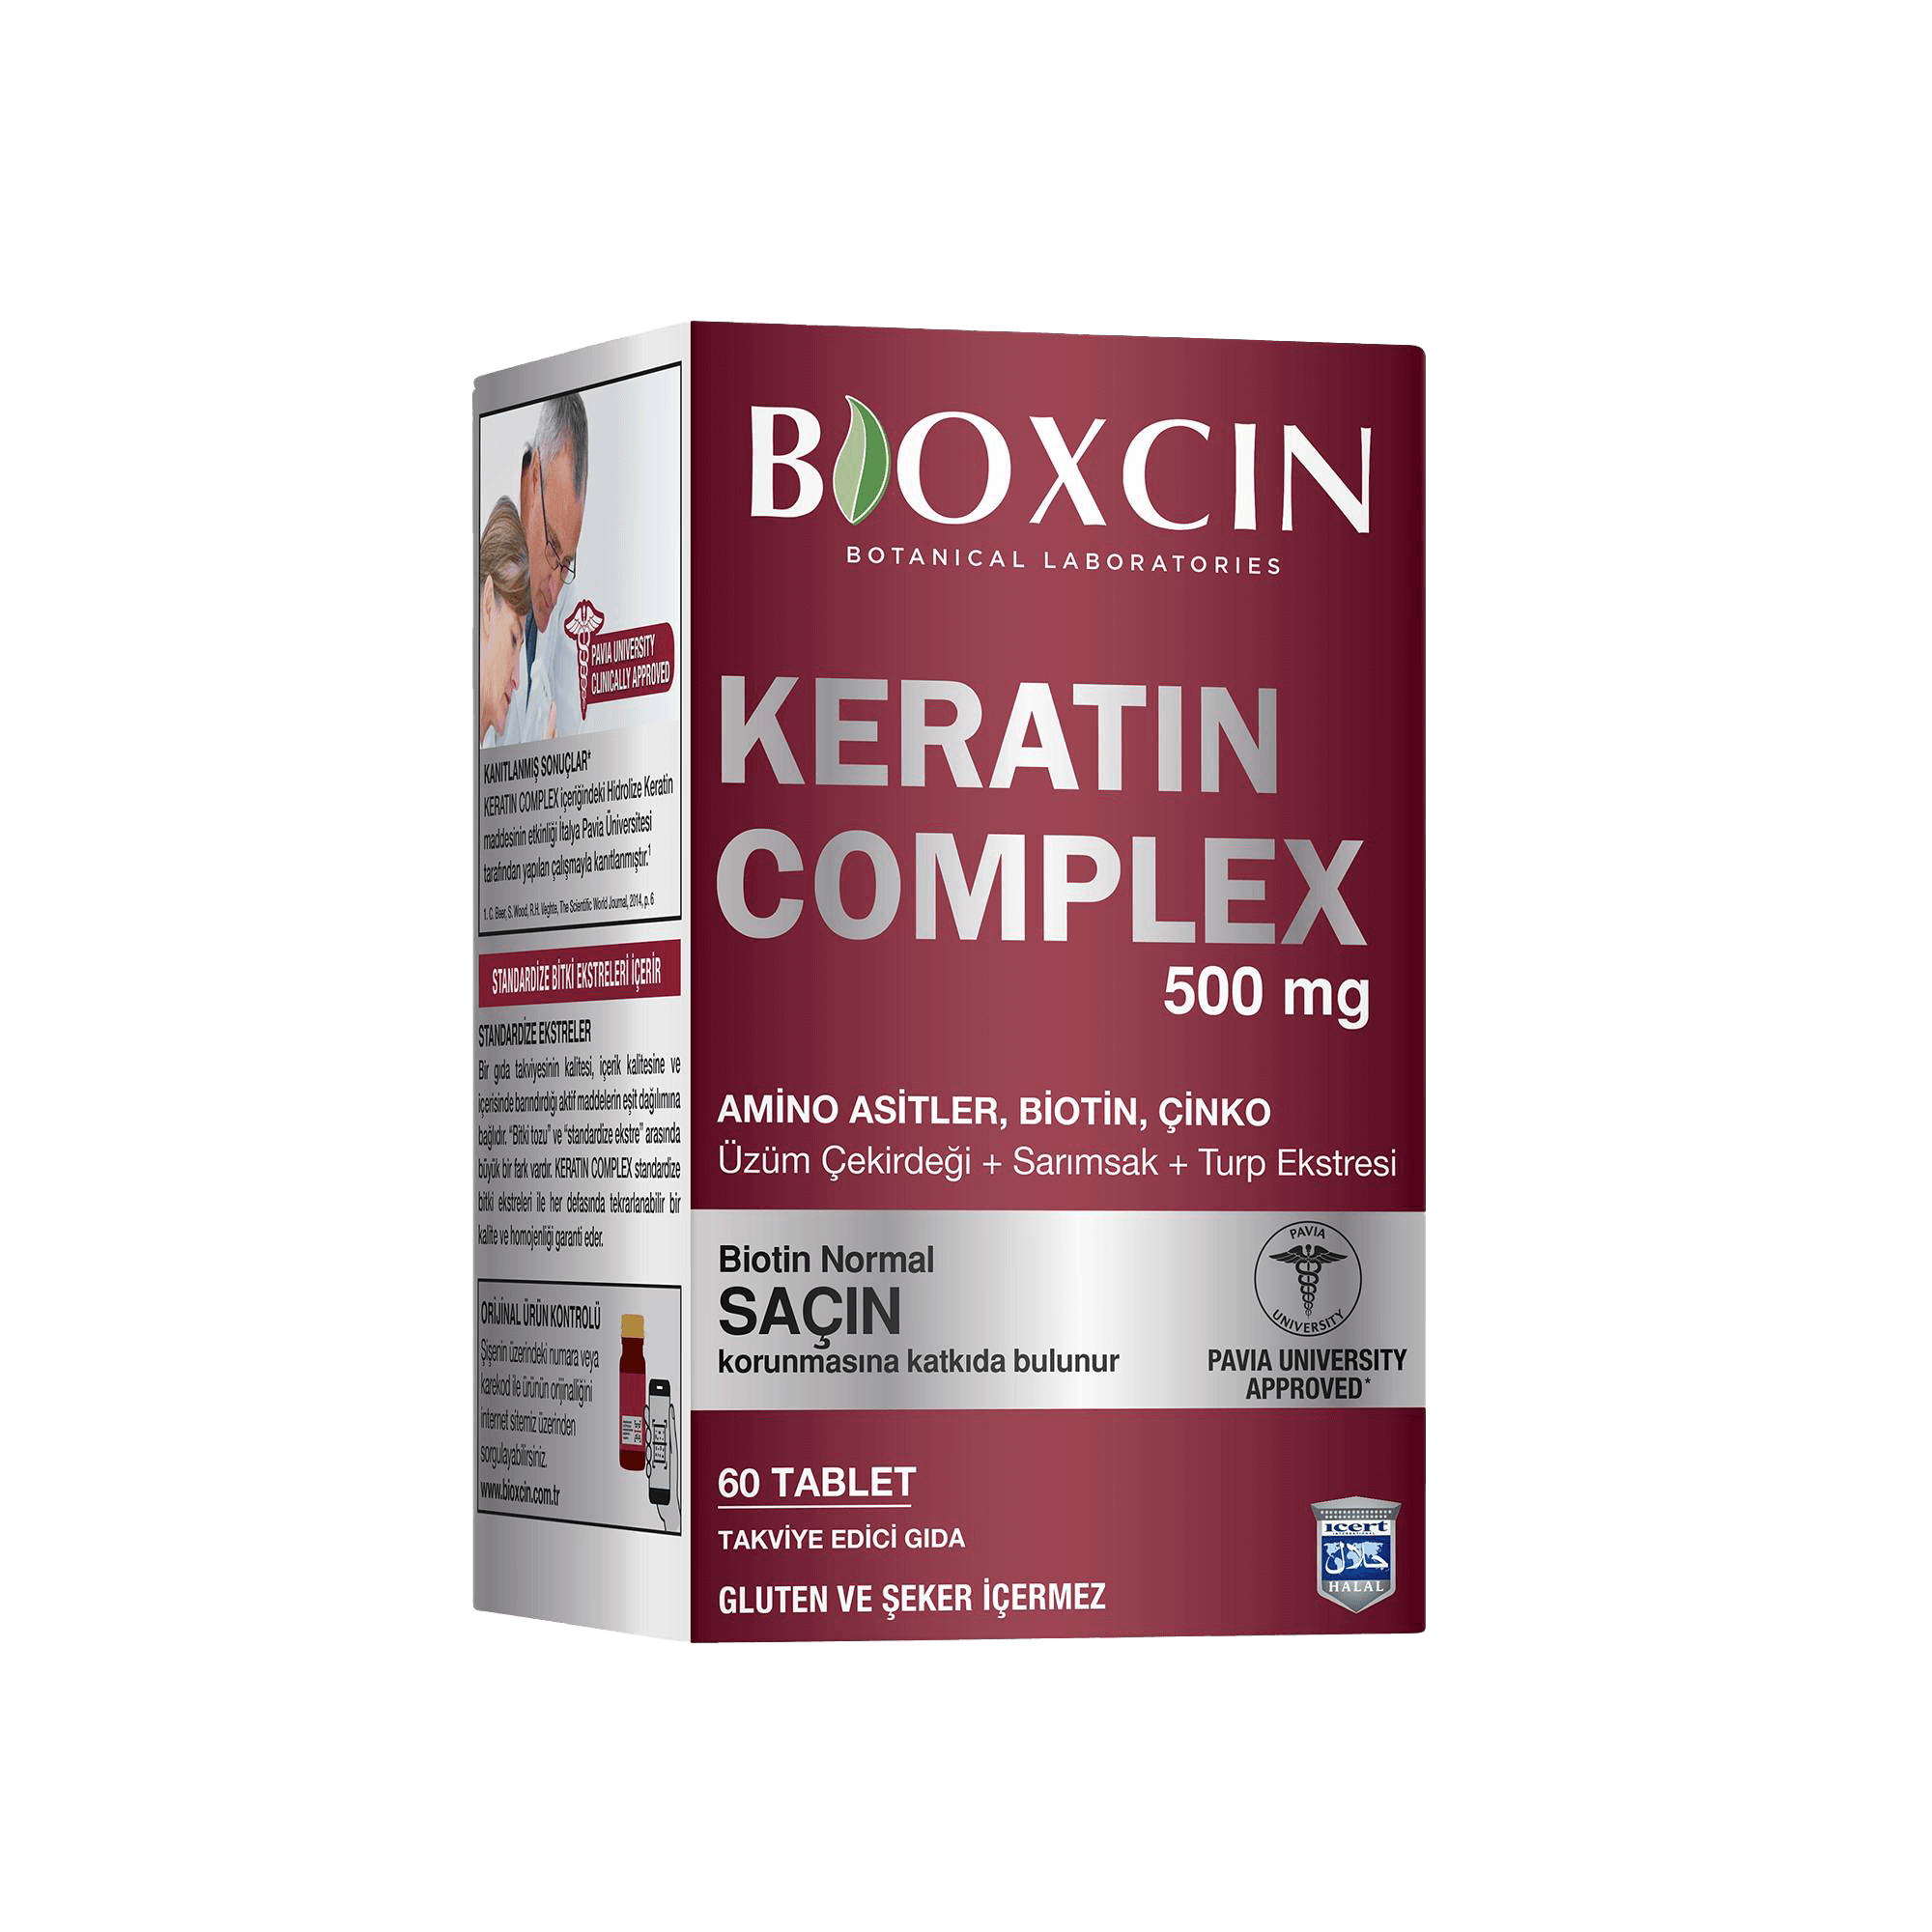 B'oxcin Keratin Complex Tablet